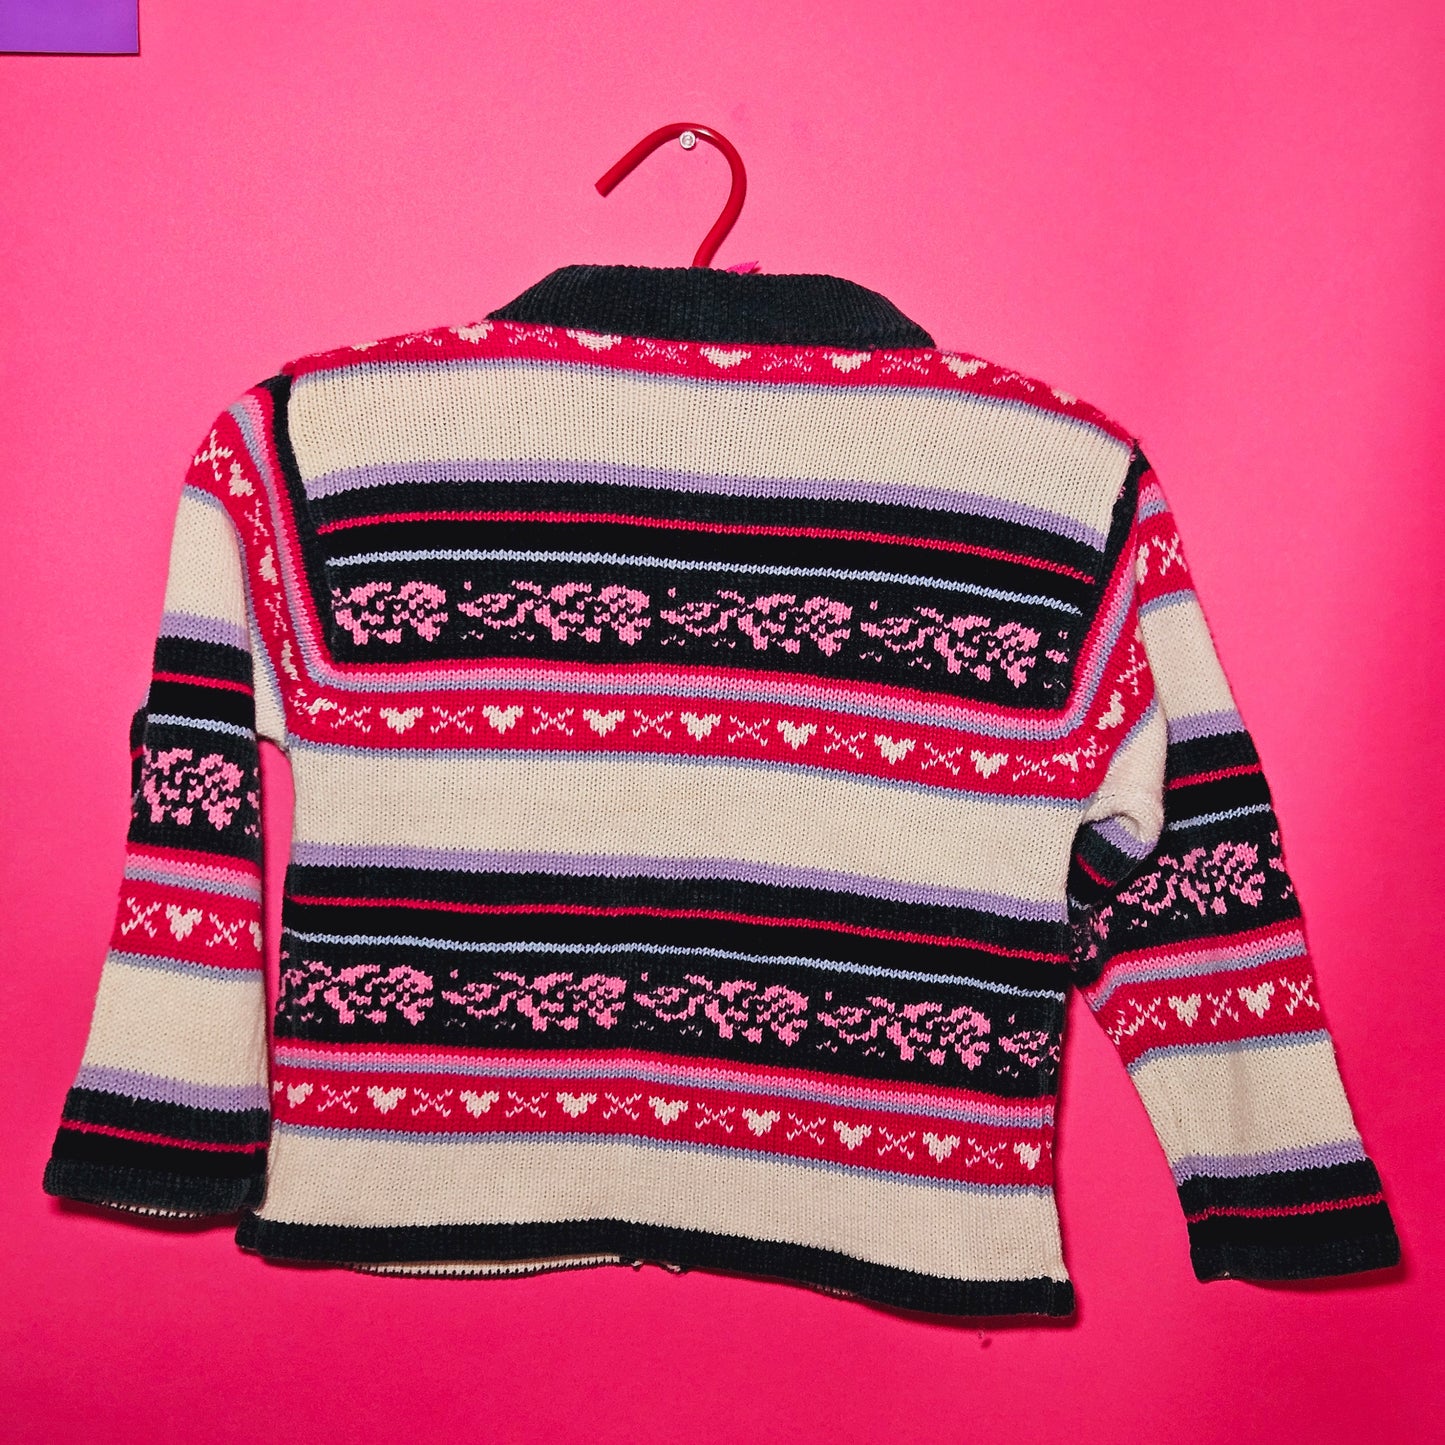 Halston baby floral zip up sweater